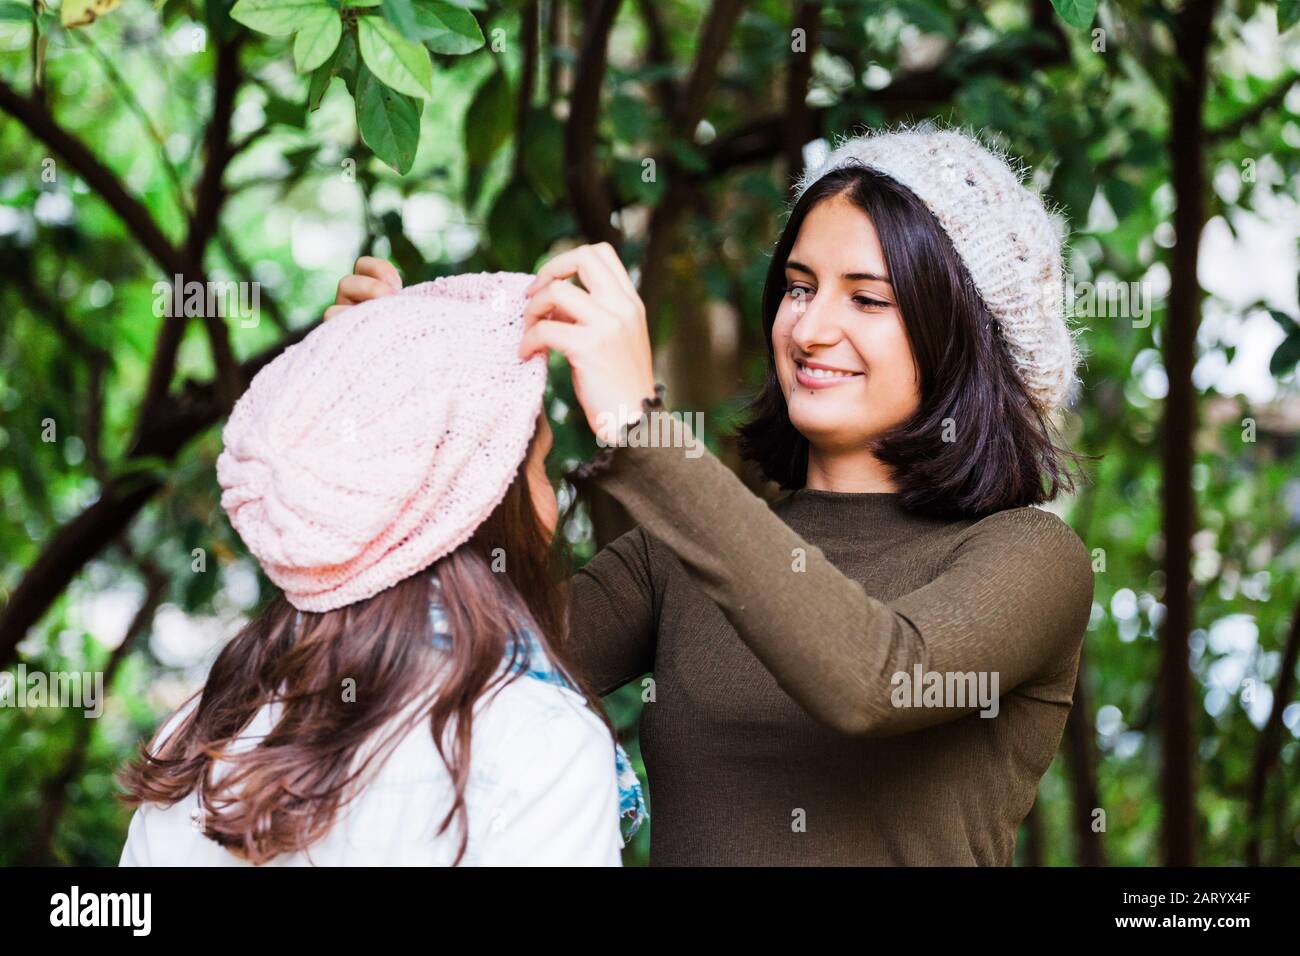 Girl adjusting sister's hat Stock Photo